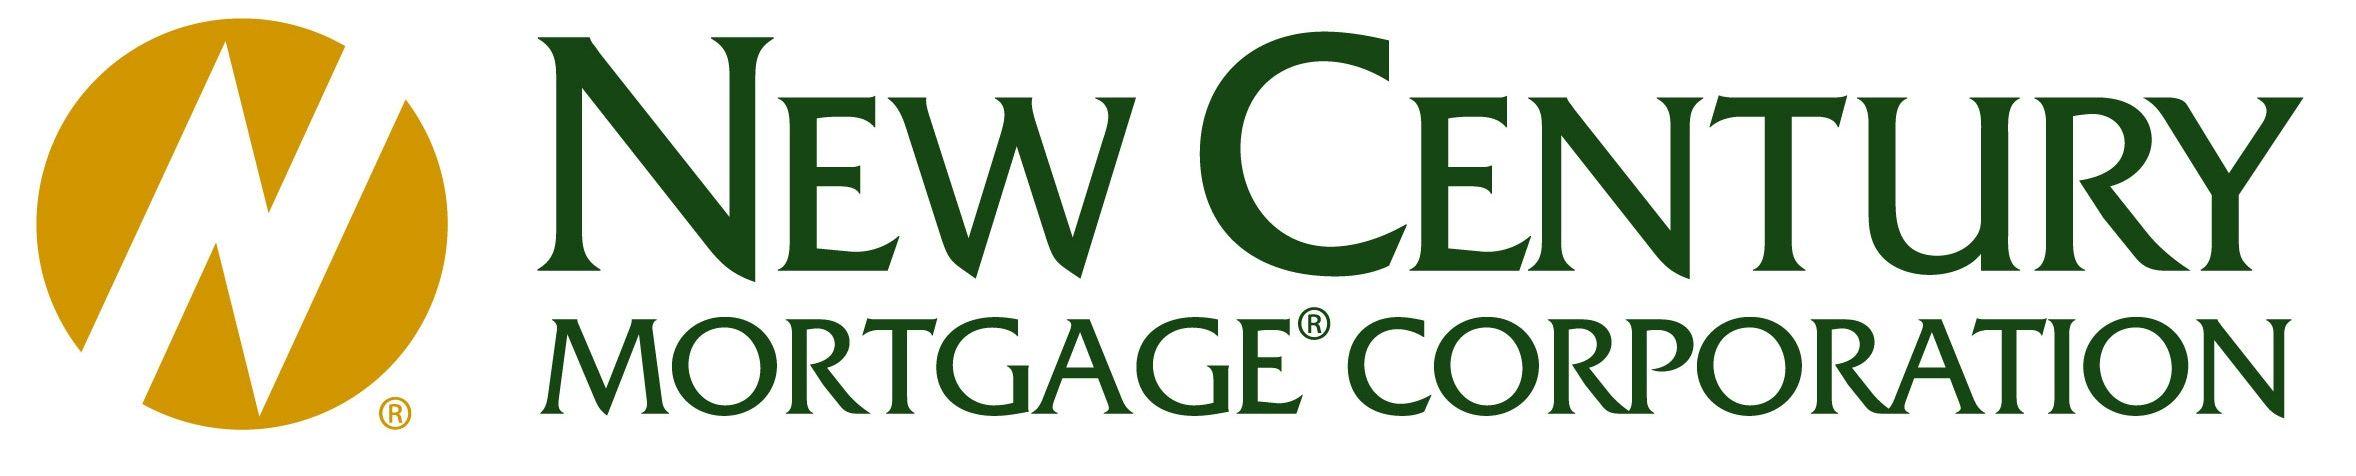 New Century Logo - NEW CENTURY MORTGAGE | DOCTEL PORTAL